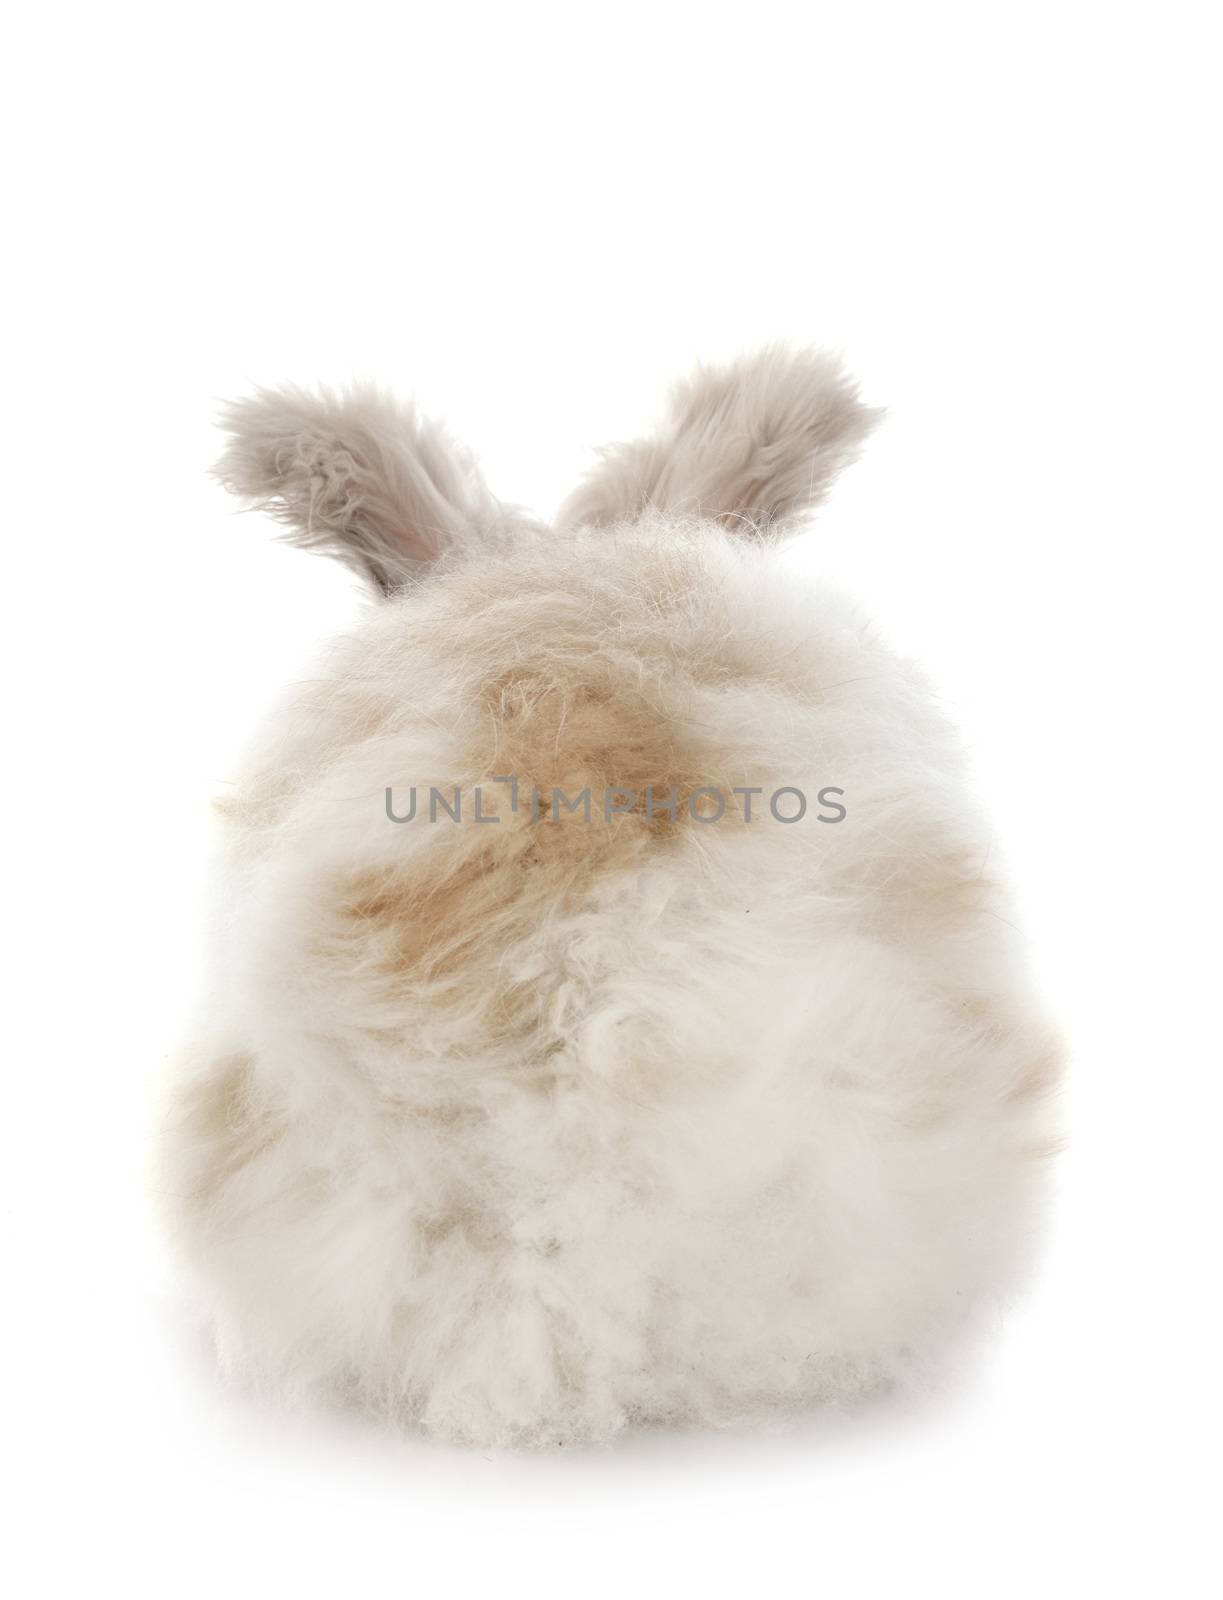 English Angora rabbit by cynoclub